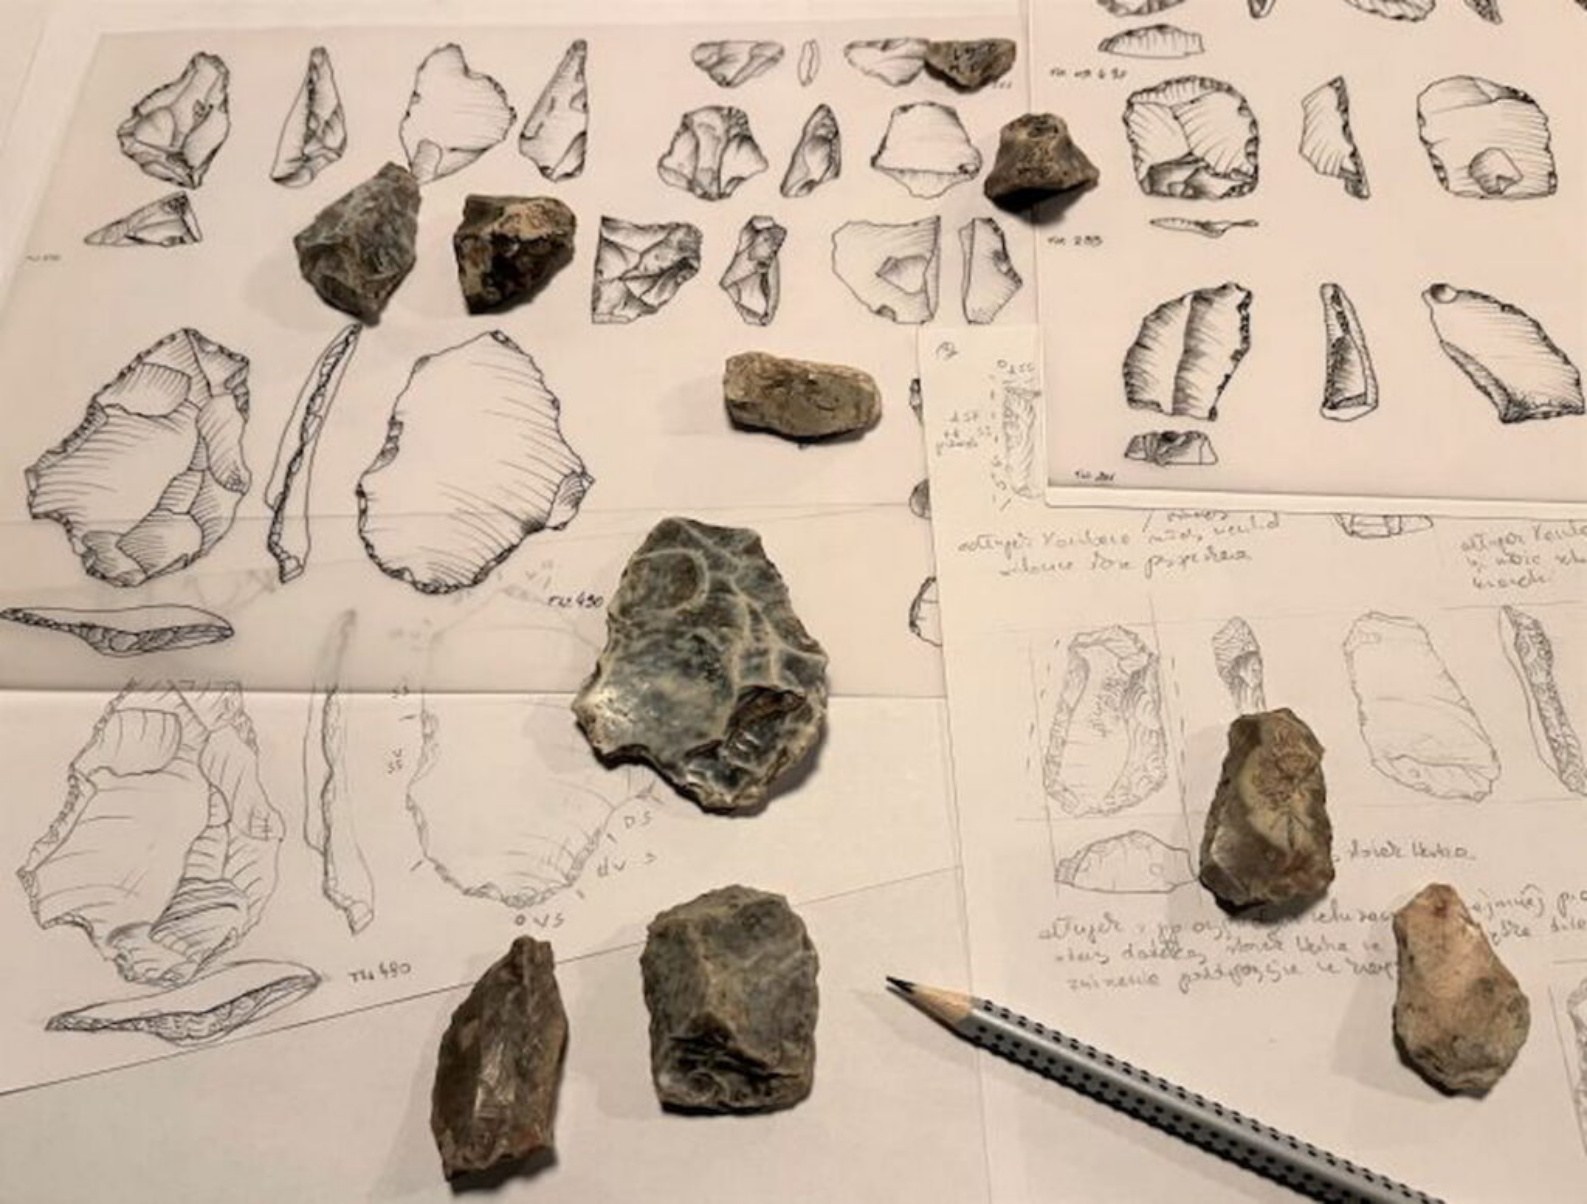 Titnago artefaktai iš Tunel Wielki urvo, kurį prieš pusę milijono metų padarė galbūt Homo heildelbergensis.